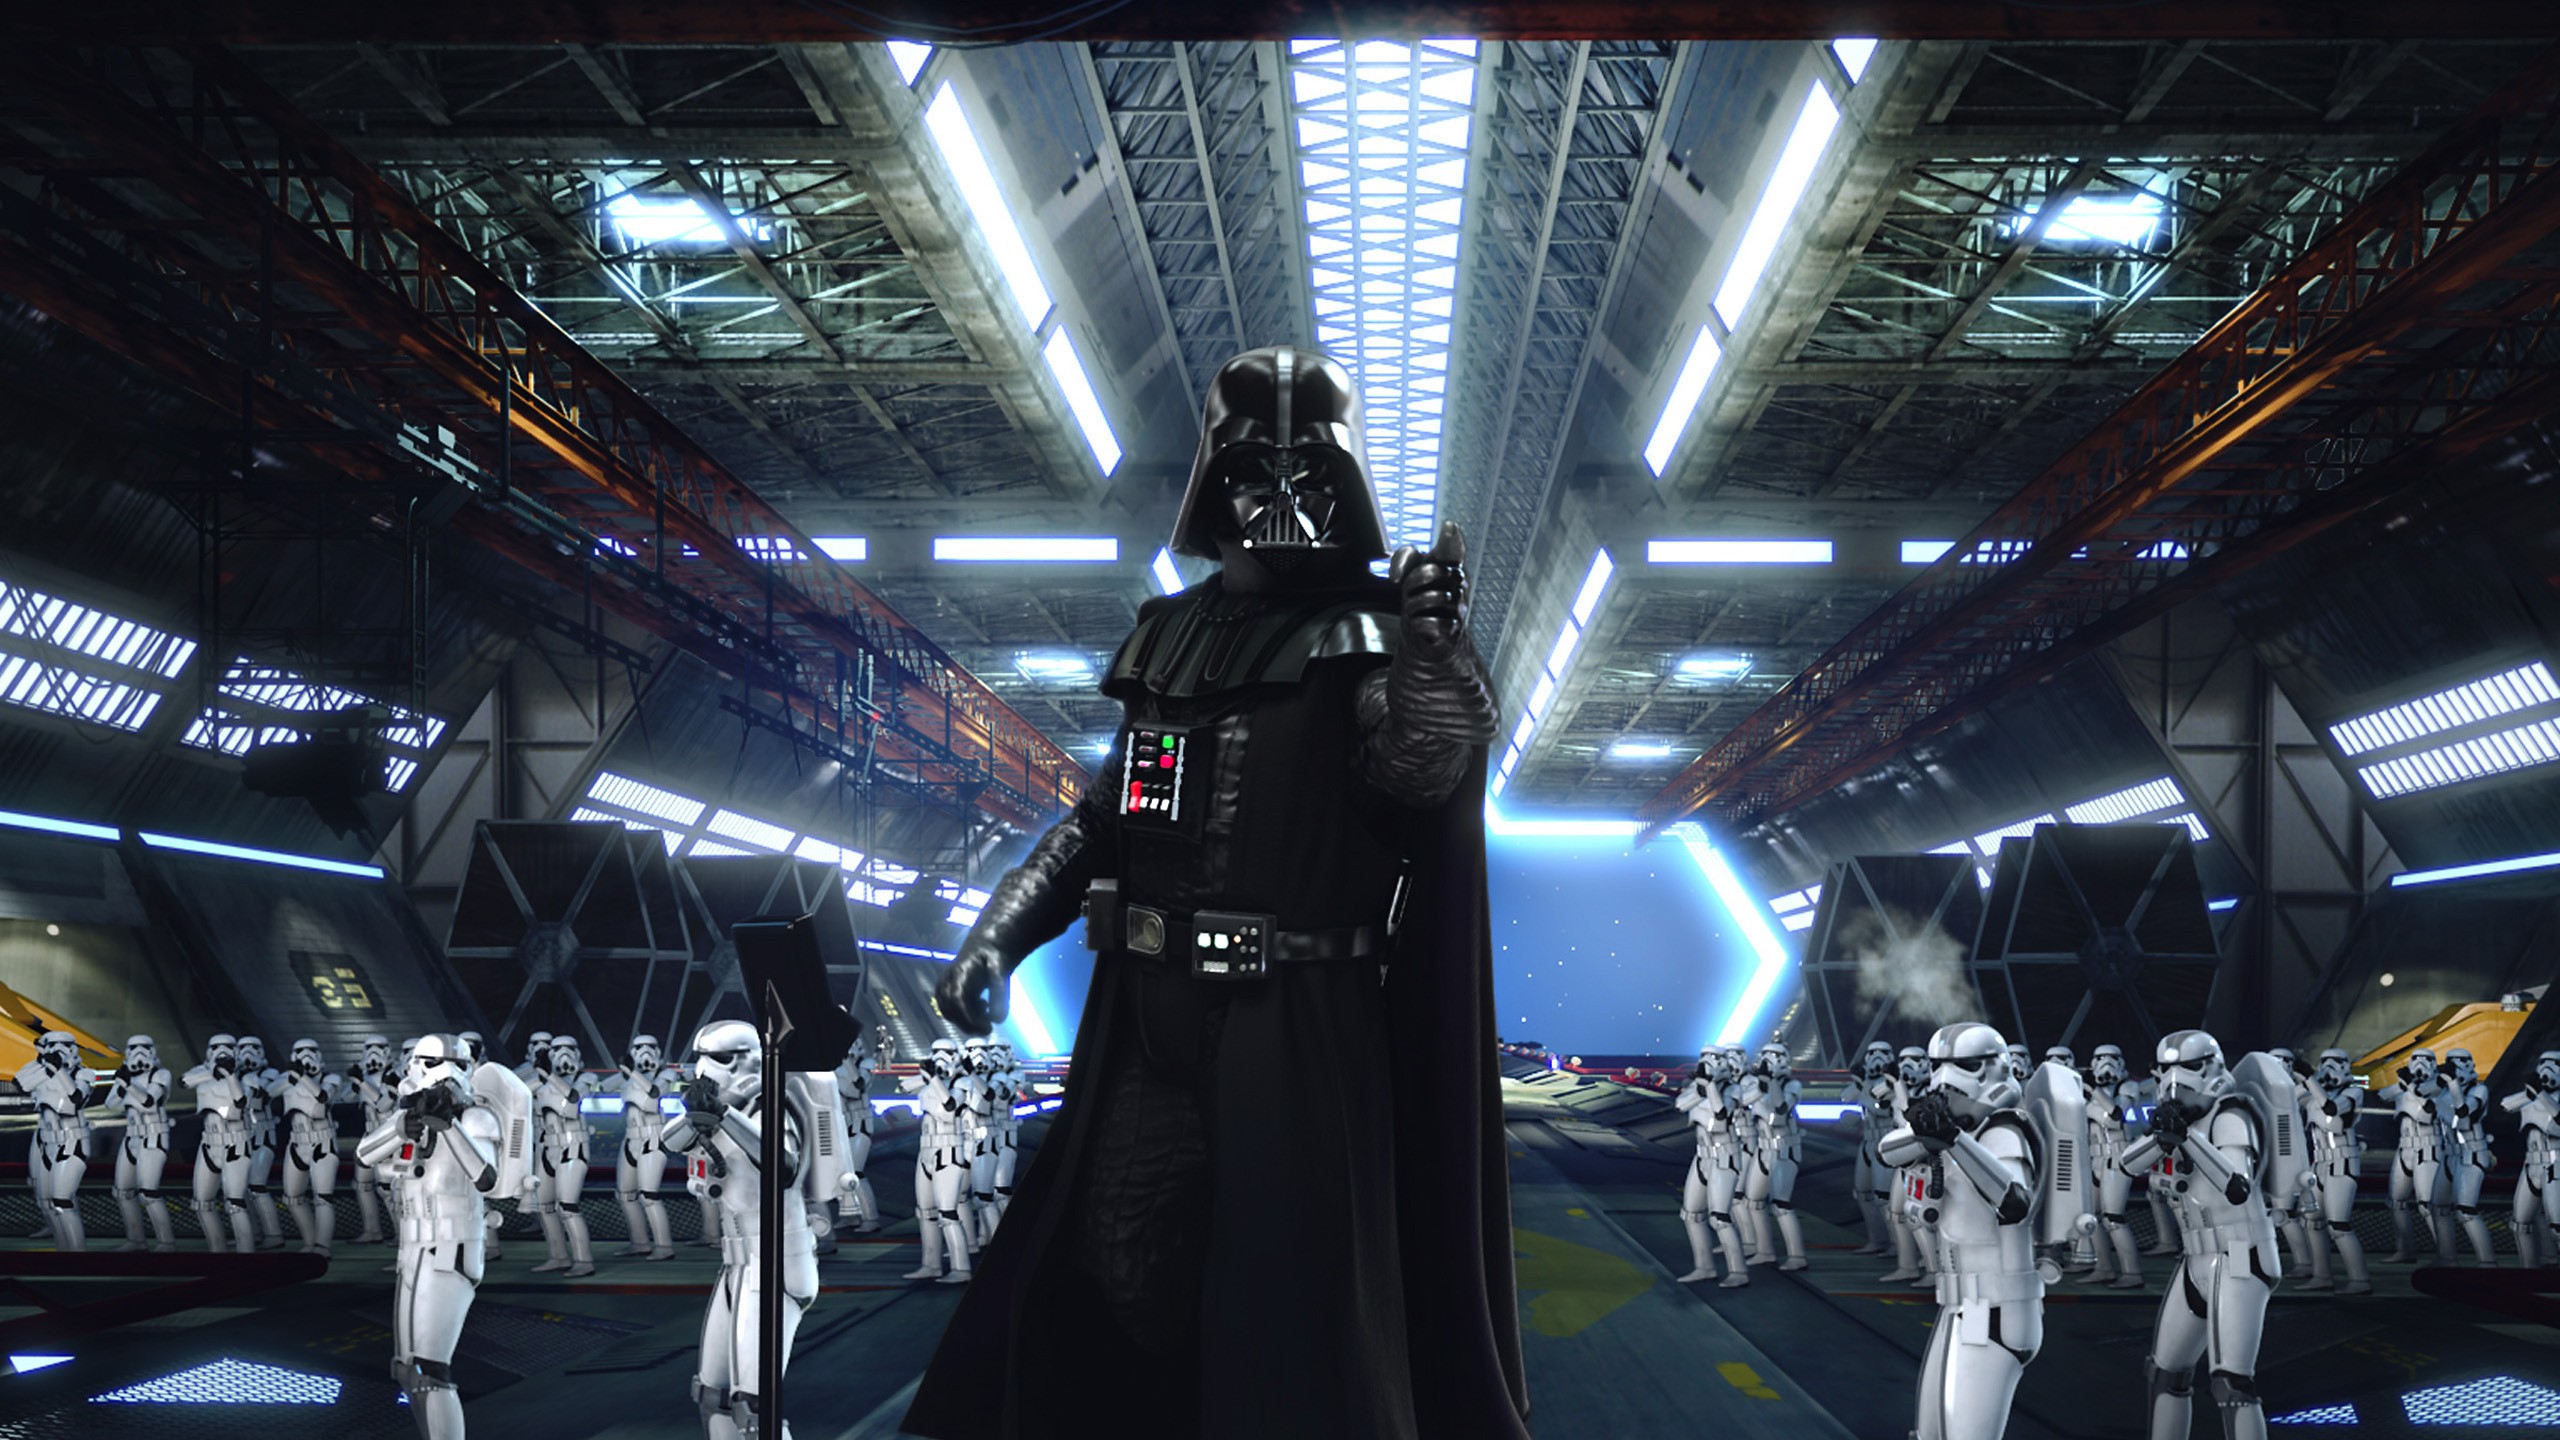 General 2560x1440 Star Wars Darth Vader stormtrooper Imperial Forces Star Wars Villains villains Sith Imperial Stormtrooper